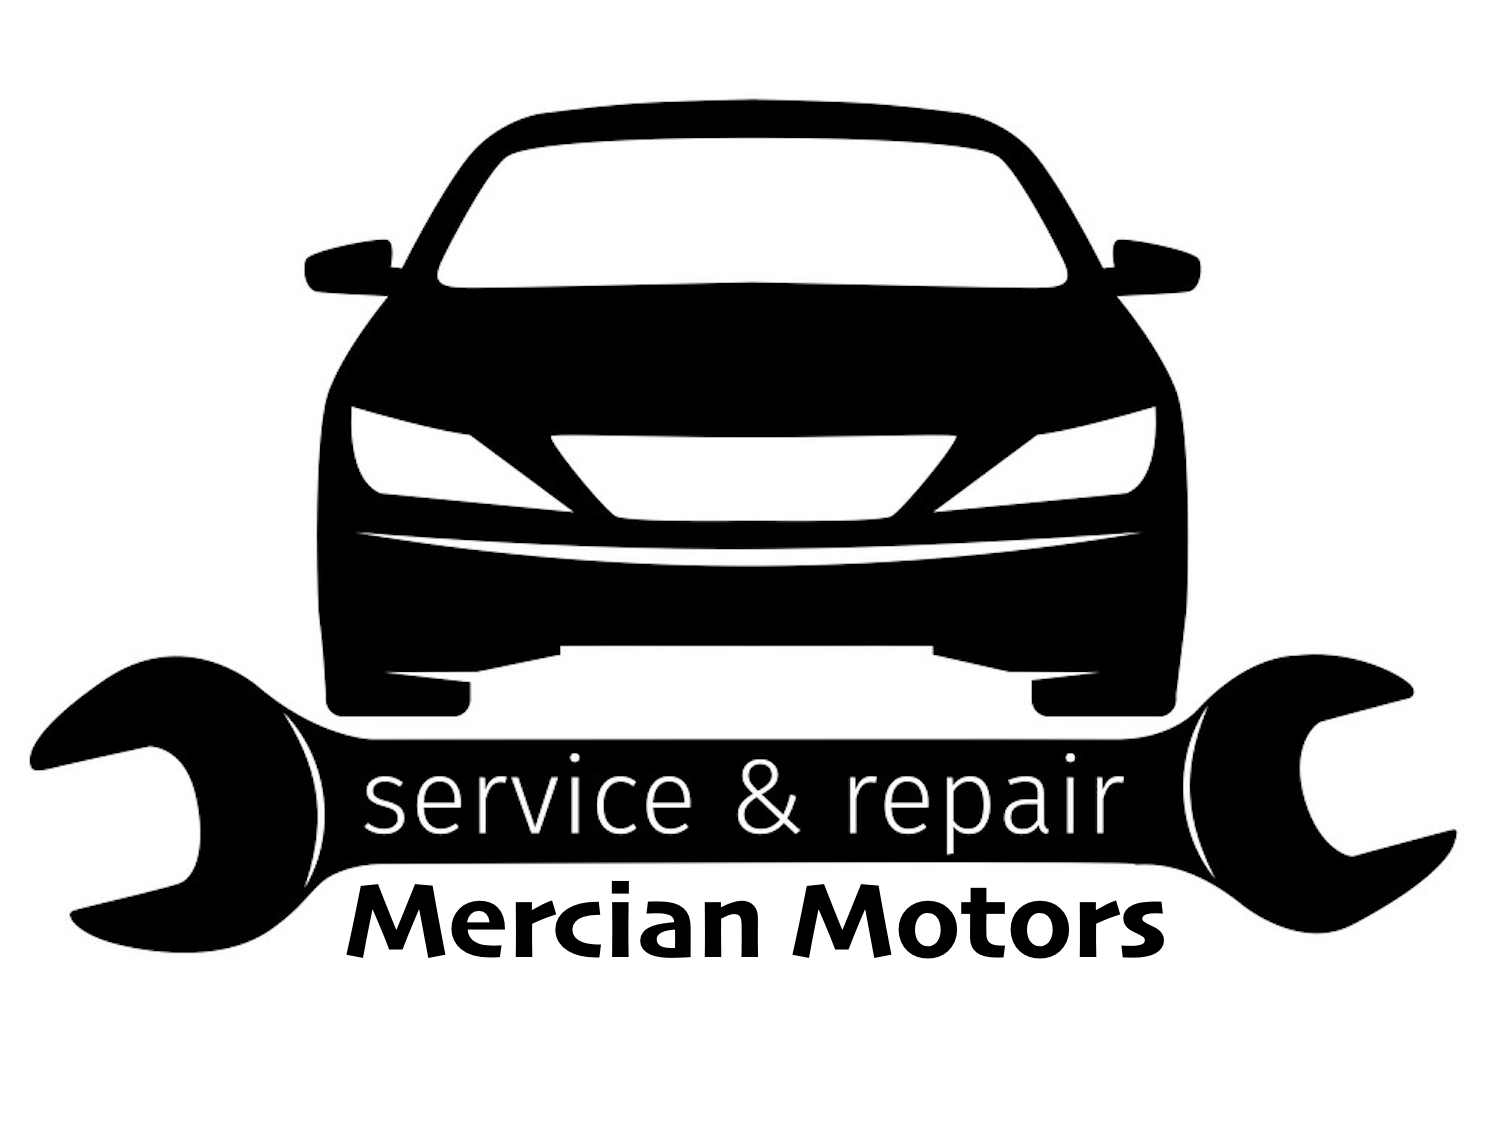 Mercian Motors - Euro Repar logo